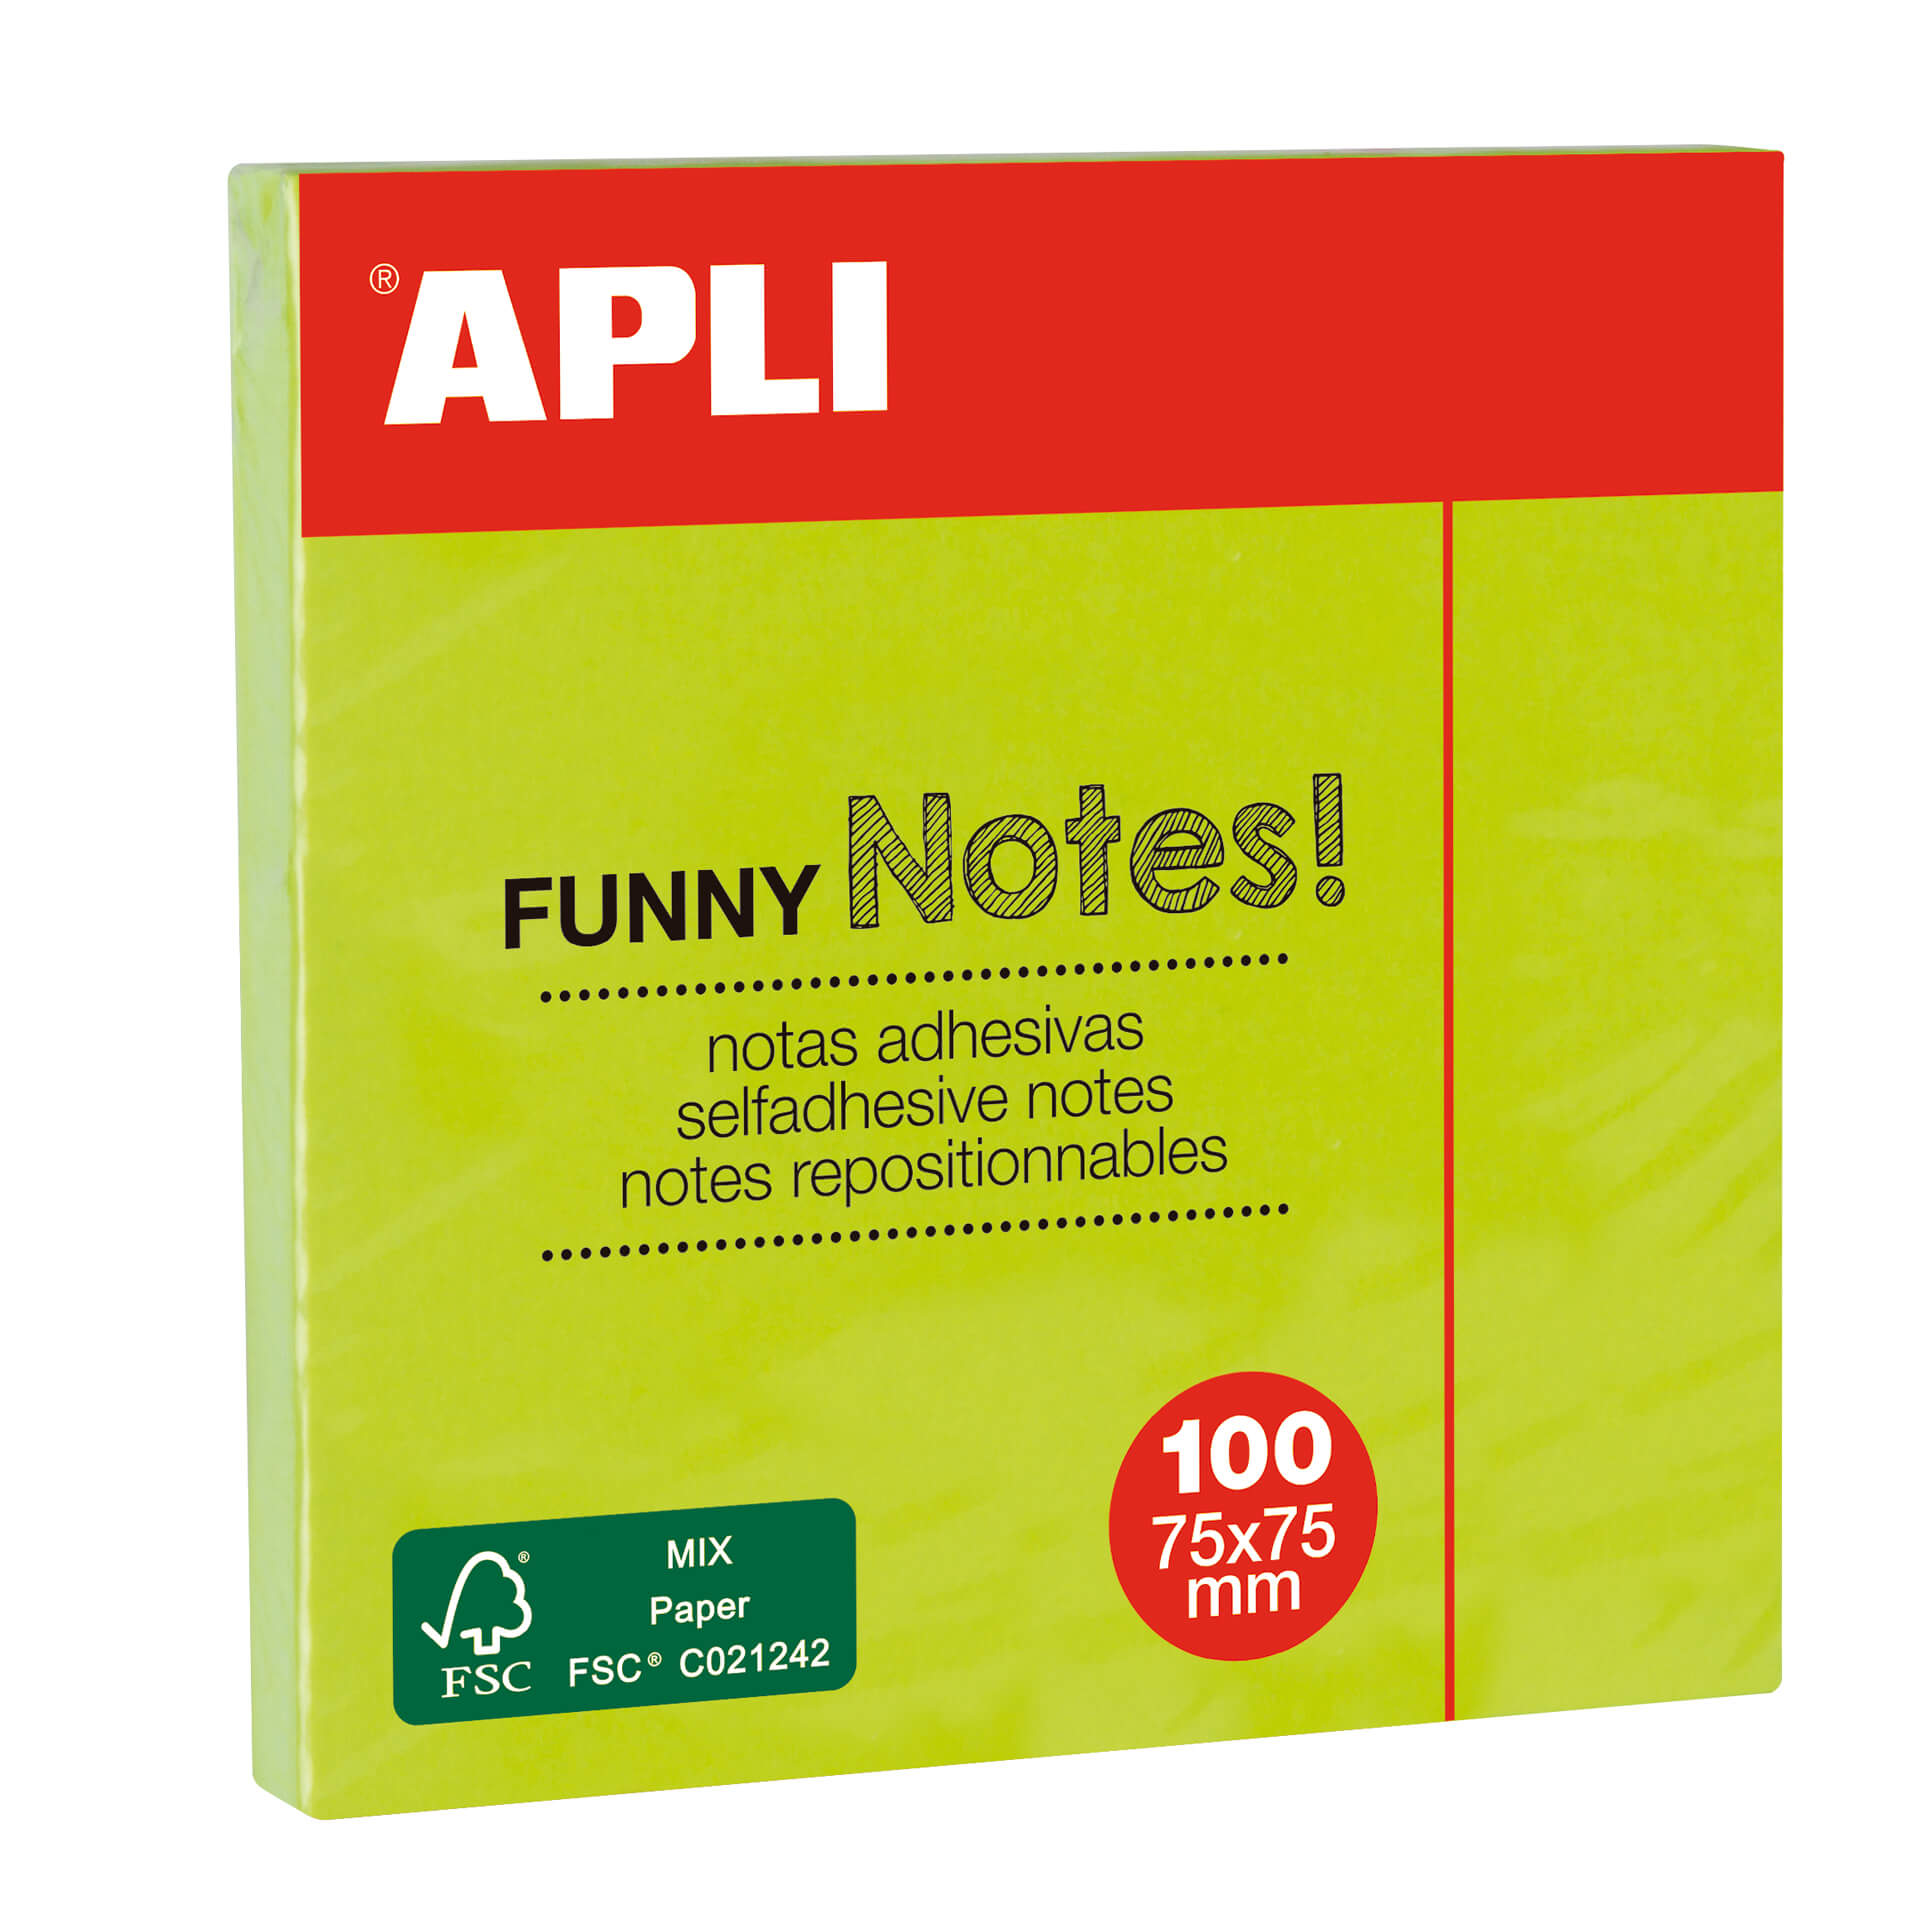 Apli Funny Sticky Notes  Adhésives 75x75mm - Bloc de 100 feuilles - Vert fluo